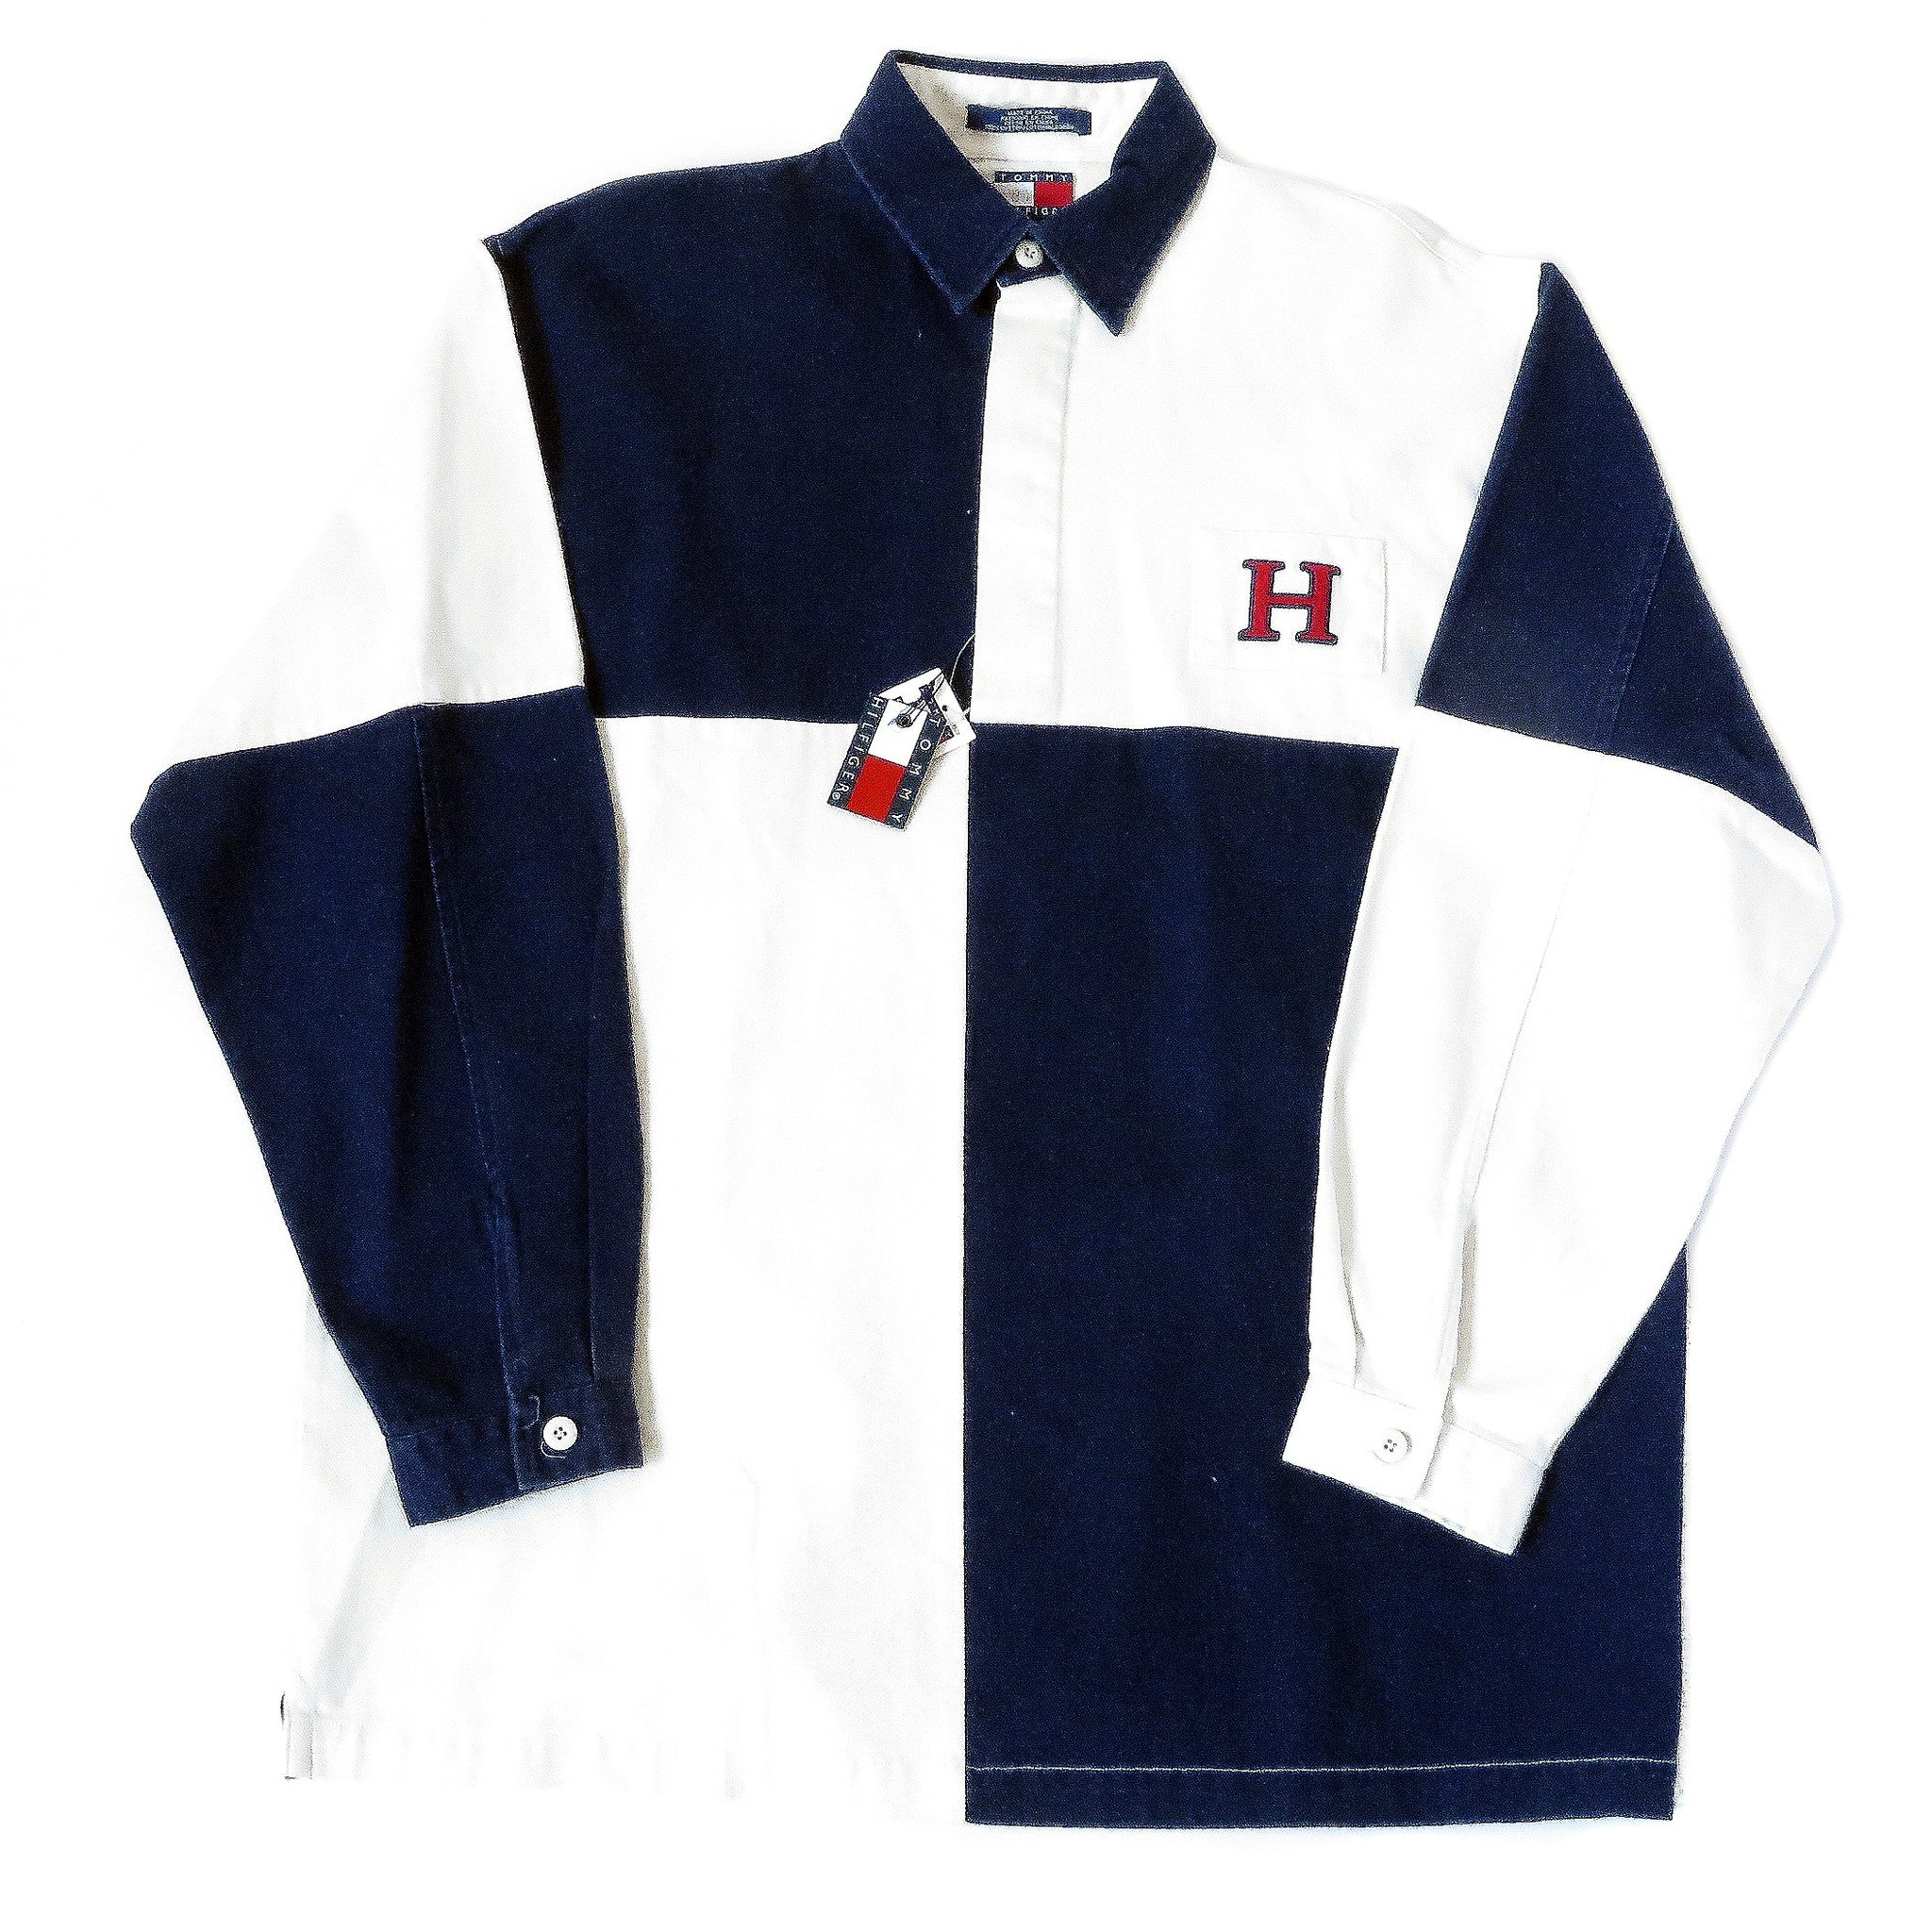 Vintage Deadstock Tommy Hilfiger Rugby Shirt Sz M